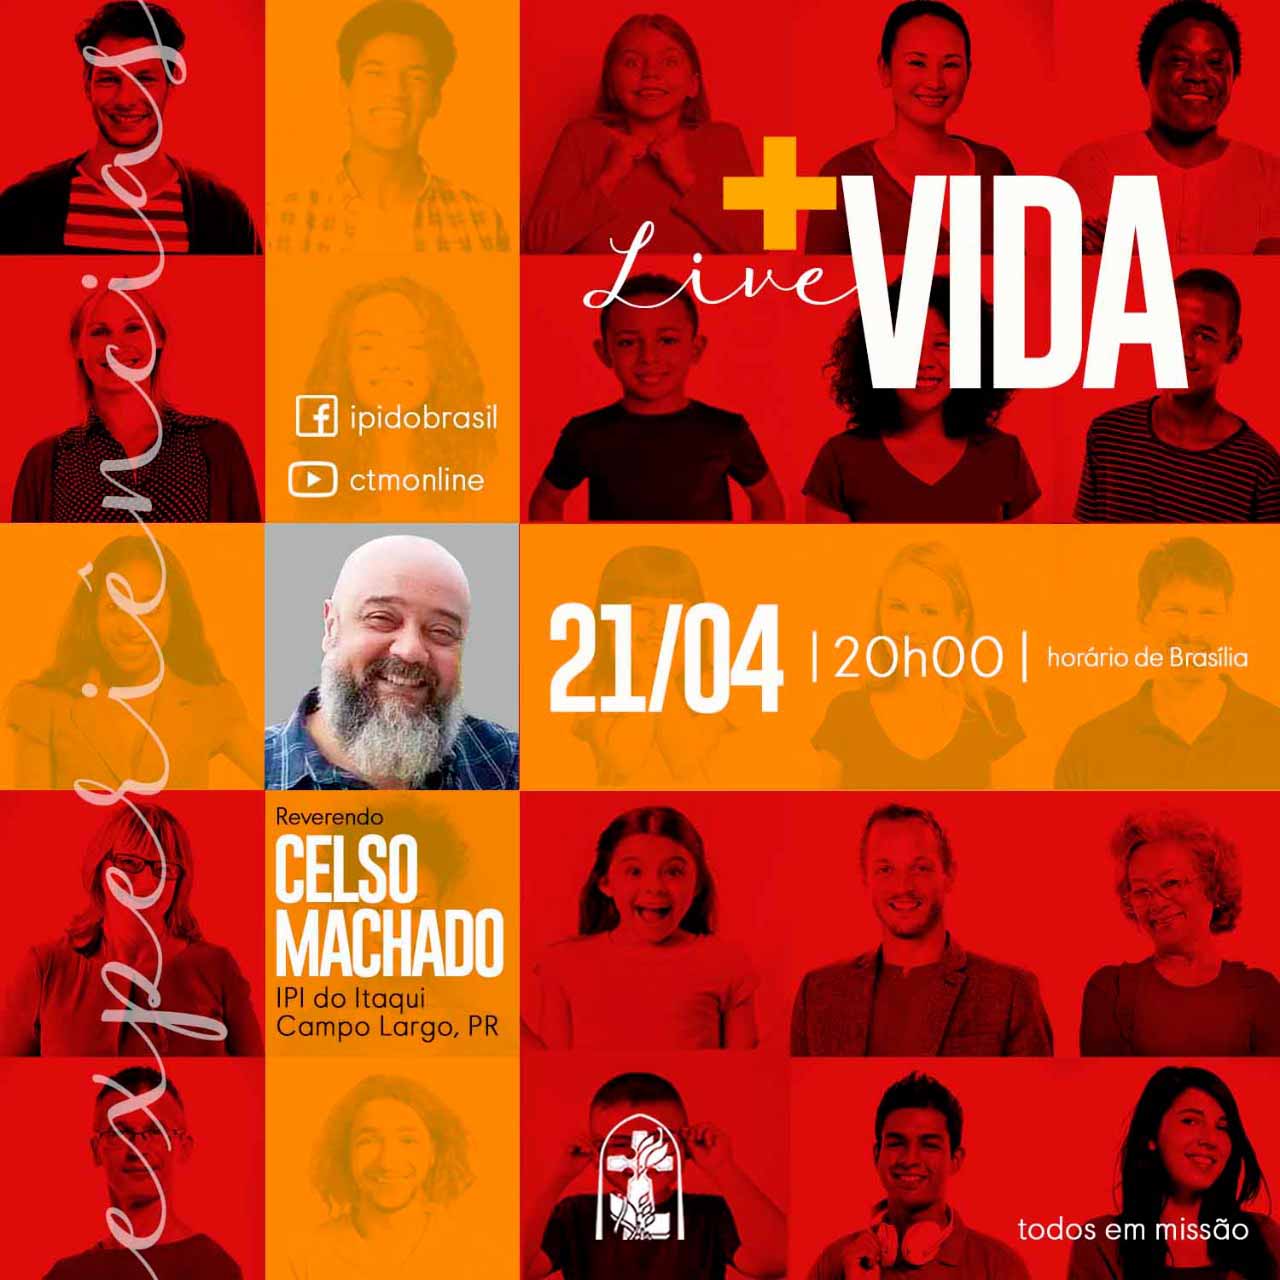 Live + Vida: Rev Celso Machado